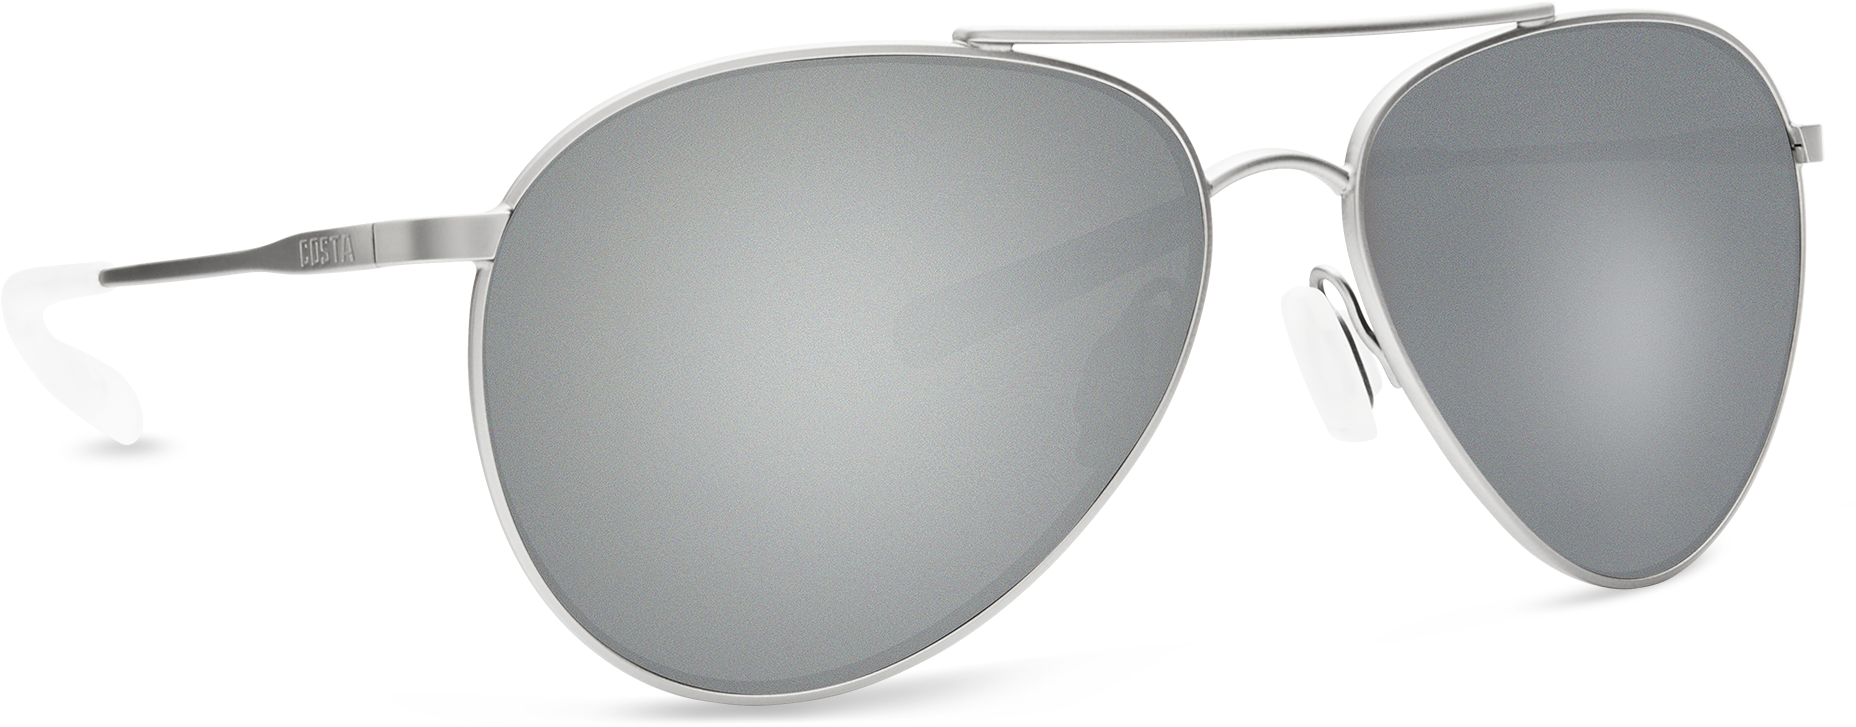 Download Silver Aviator Sunglasses | Wallpapers.com